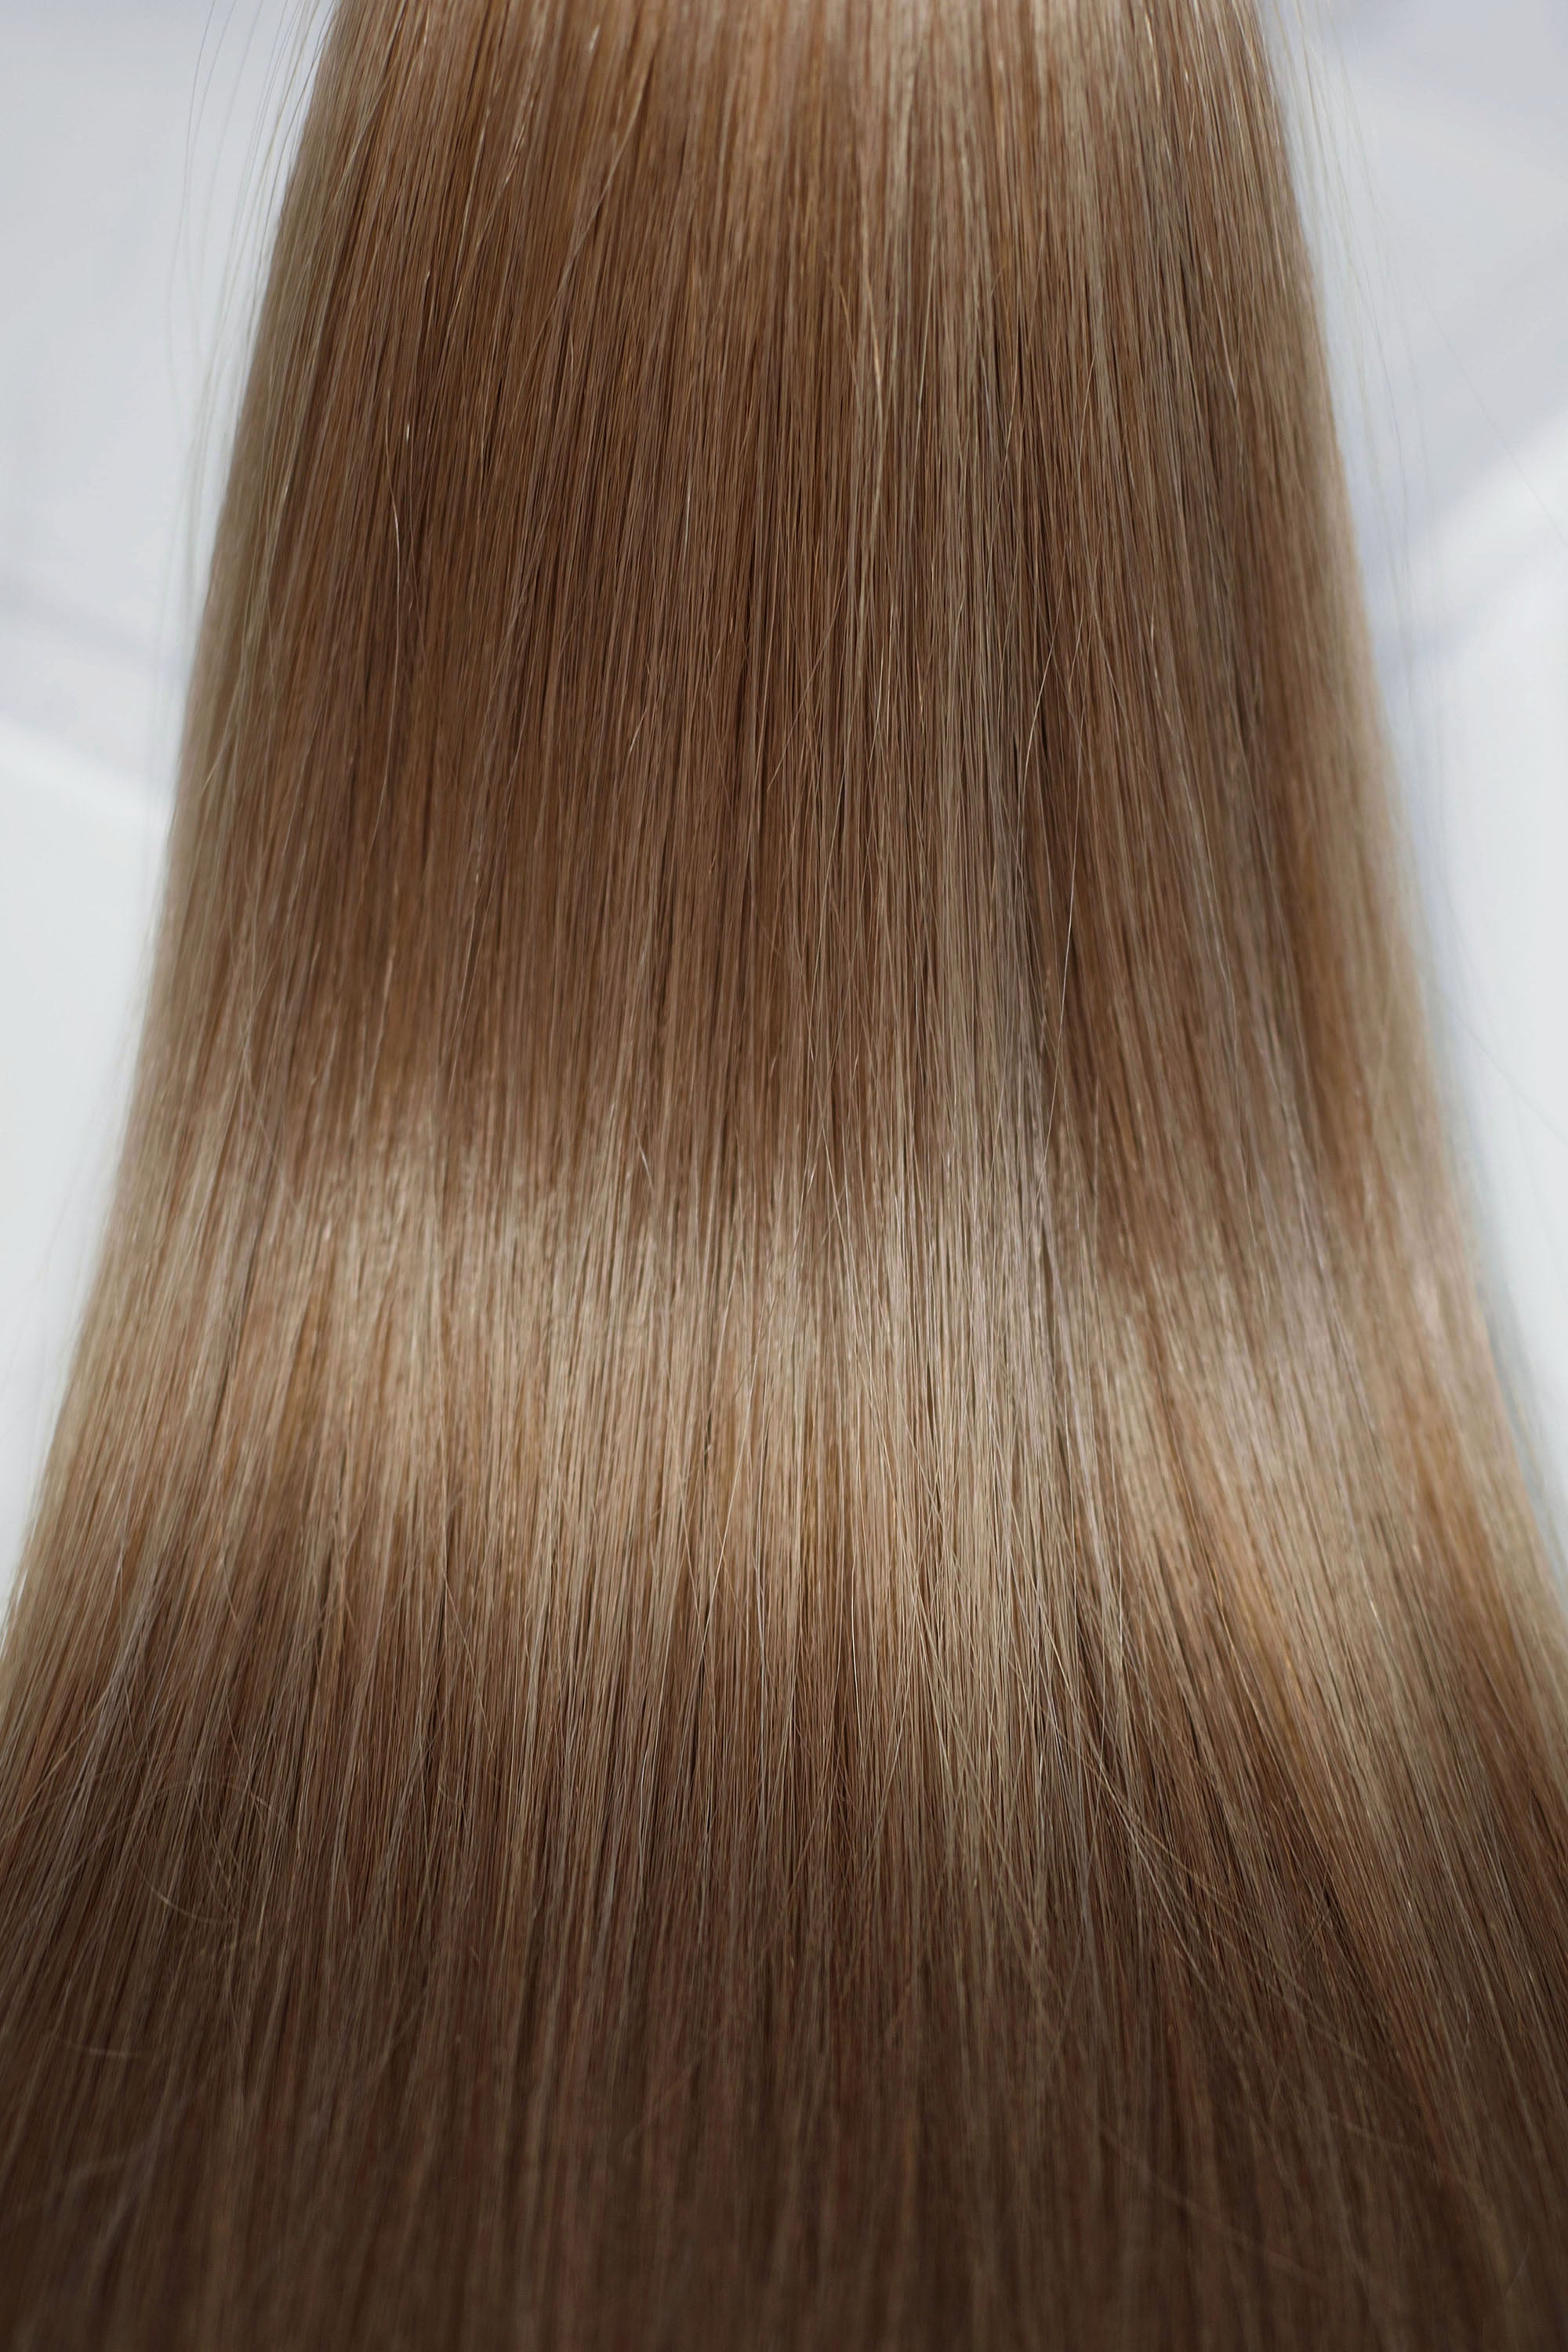 Behair professional Keratin Tip "Premium" 16" (40cm) Natural Straight Light Ash Brown #10 - 25g (1g each pcs) hair extensions